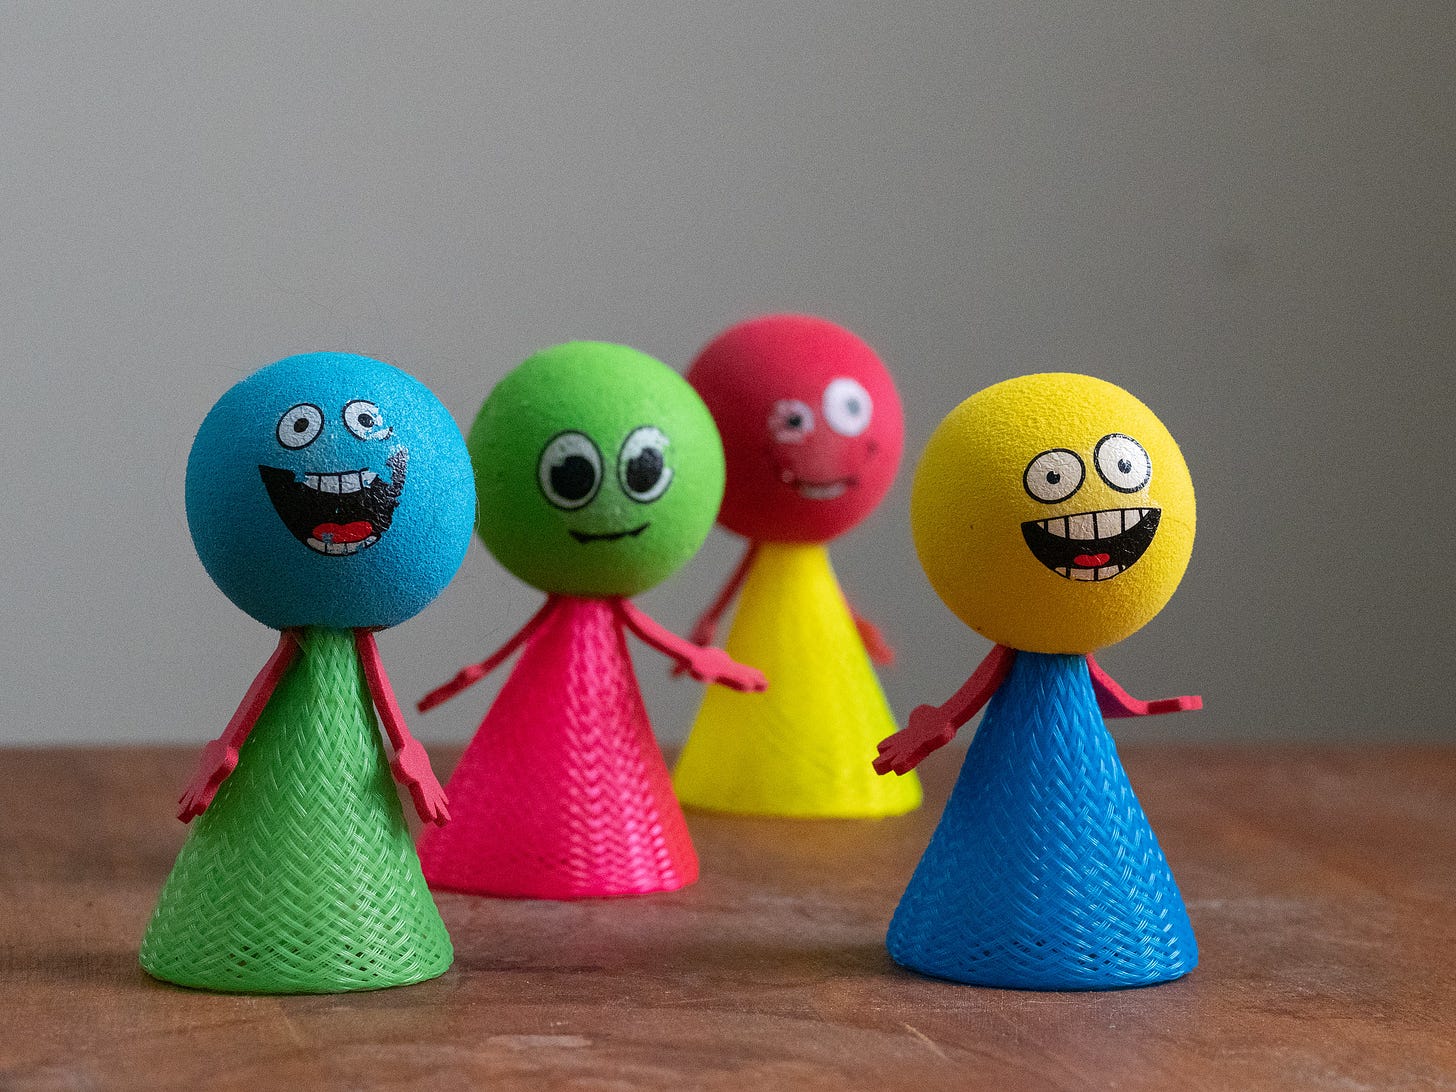 Four little figurines